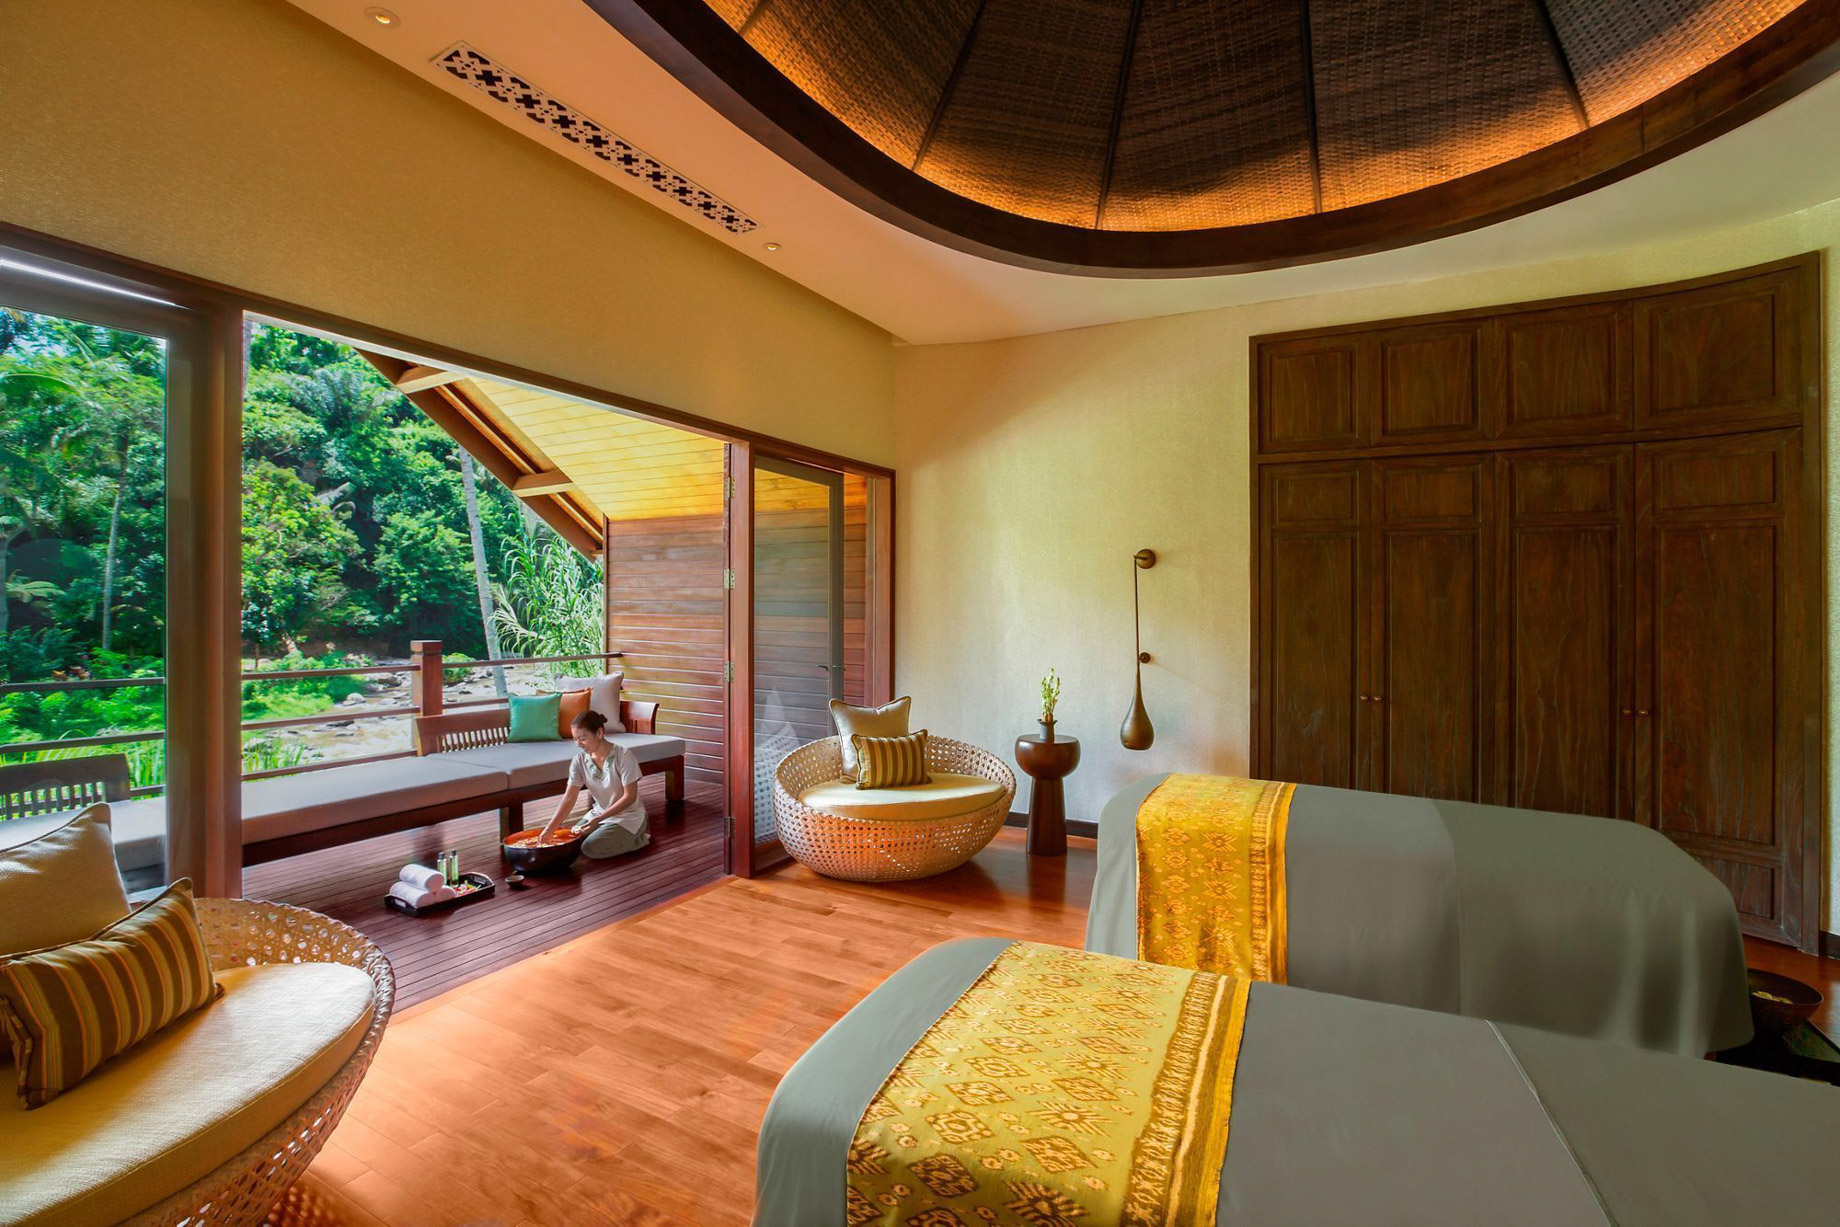 The Ritz-Carlton, Mandapa Reserve Resort – Ubud, Bali, Indonesia – Spa Treatroom Room